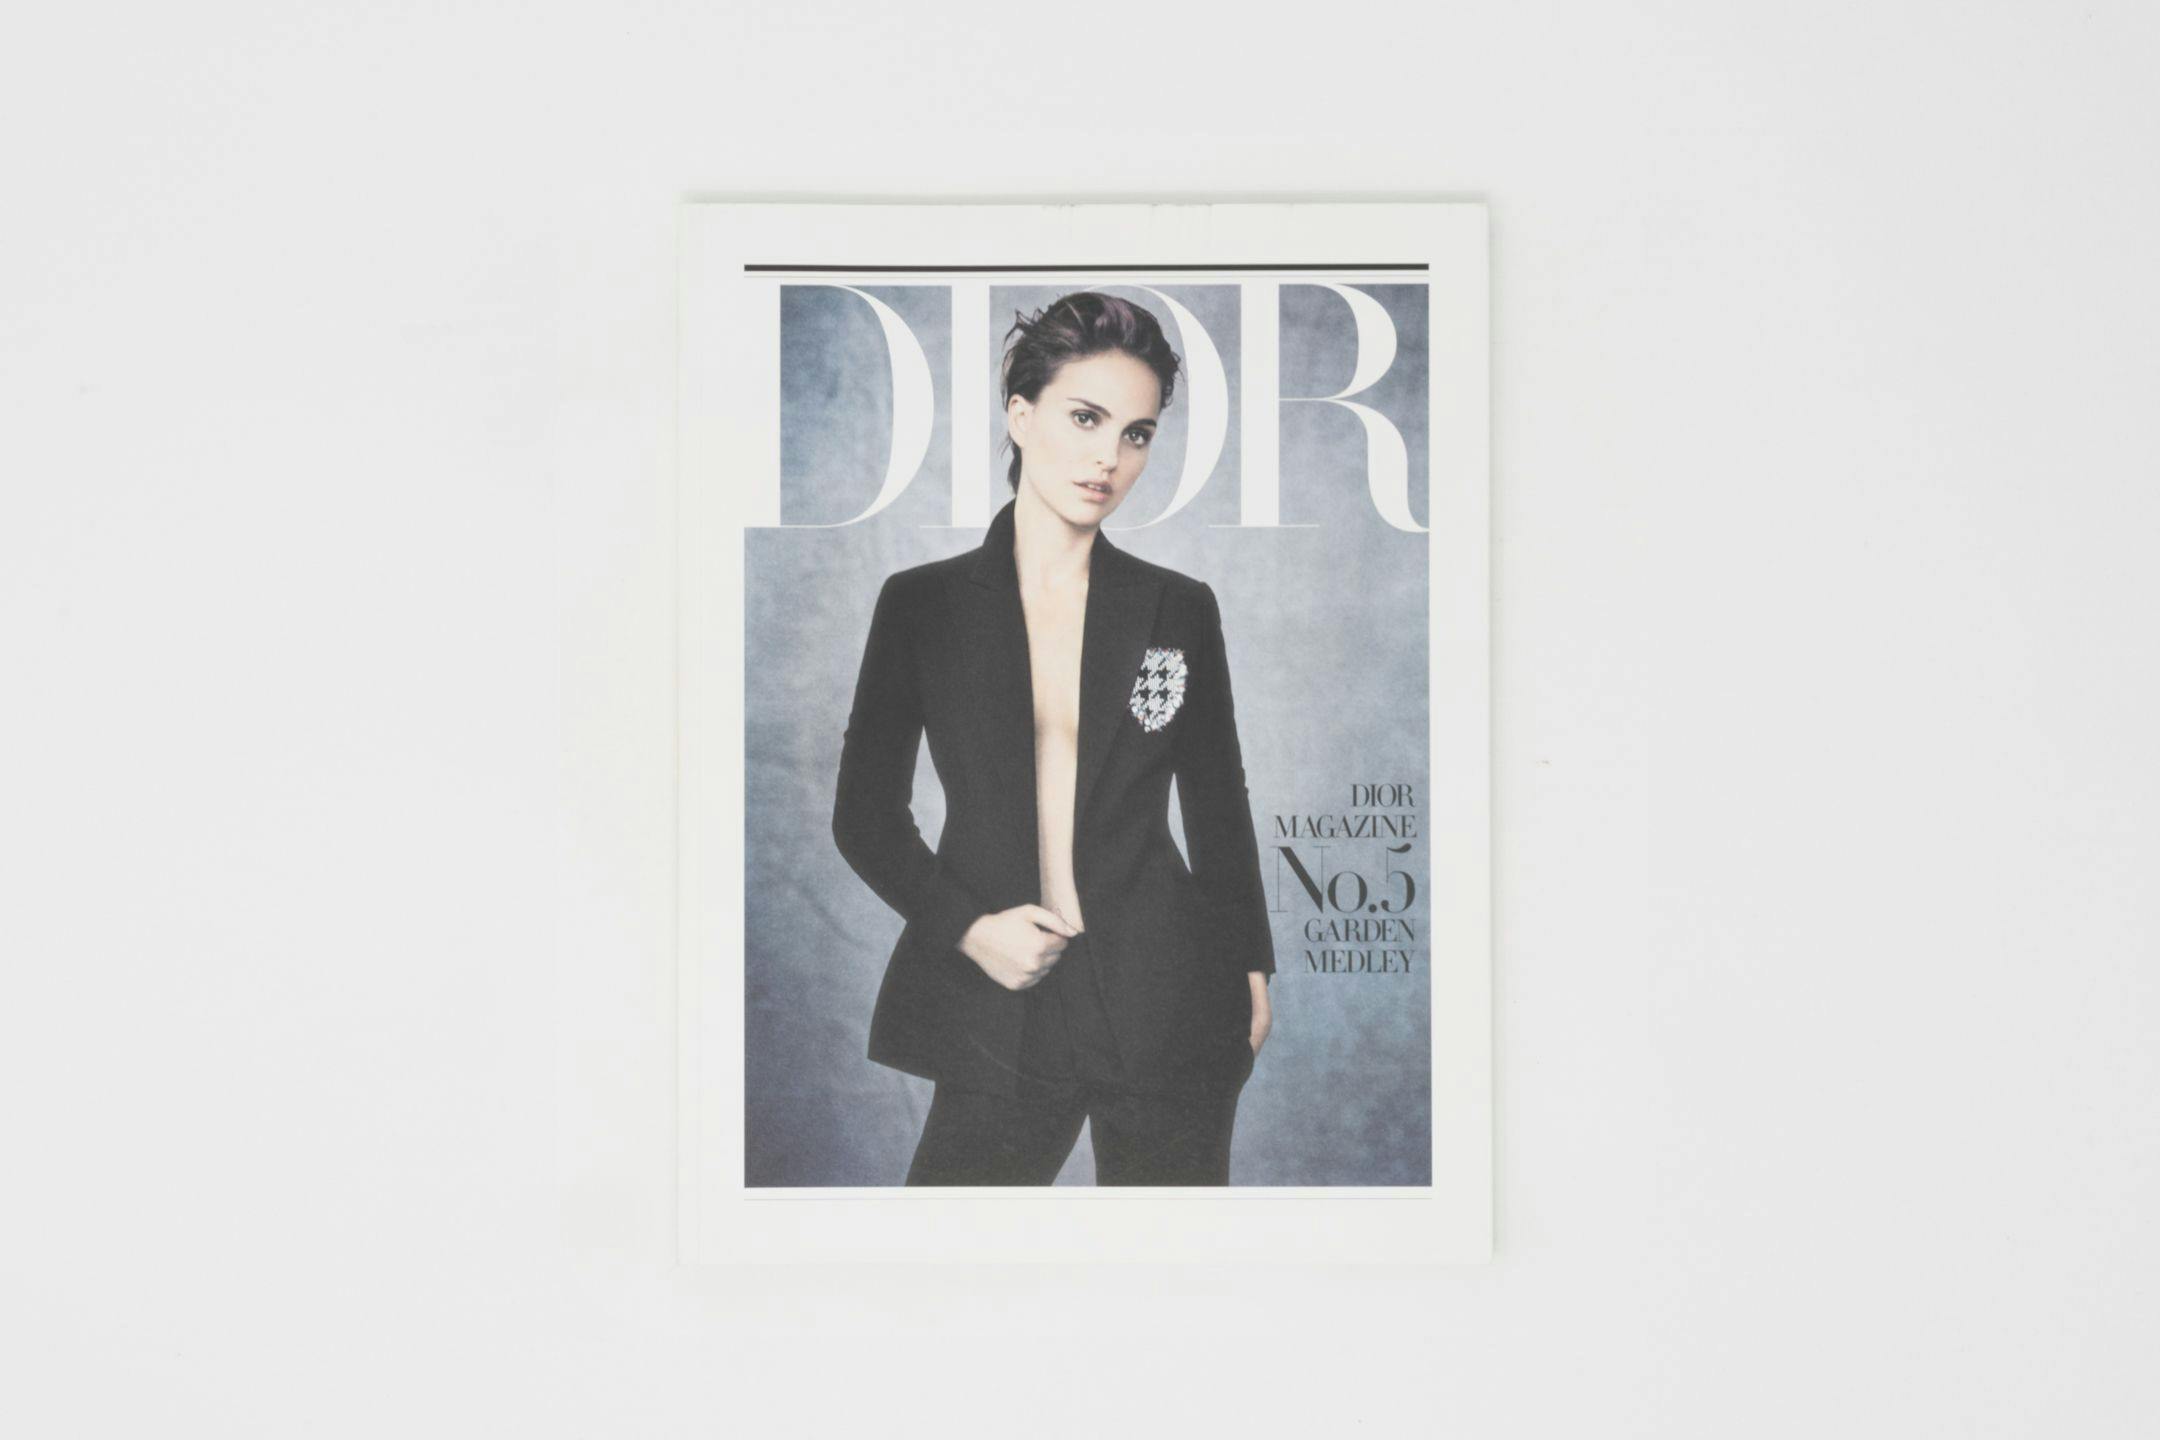 Dior Magazine No5 Garden Medley  International Library of Fashion